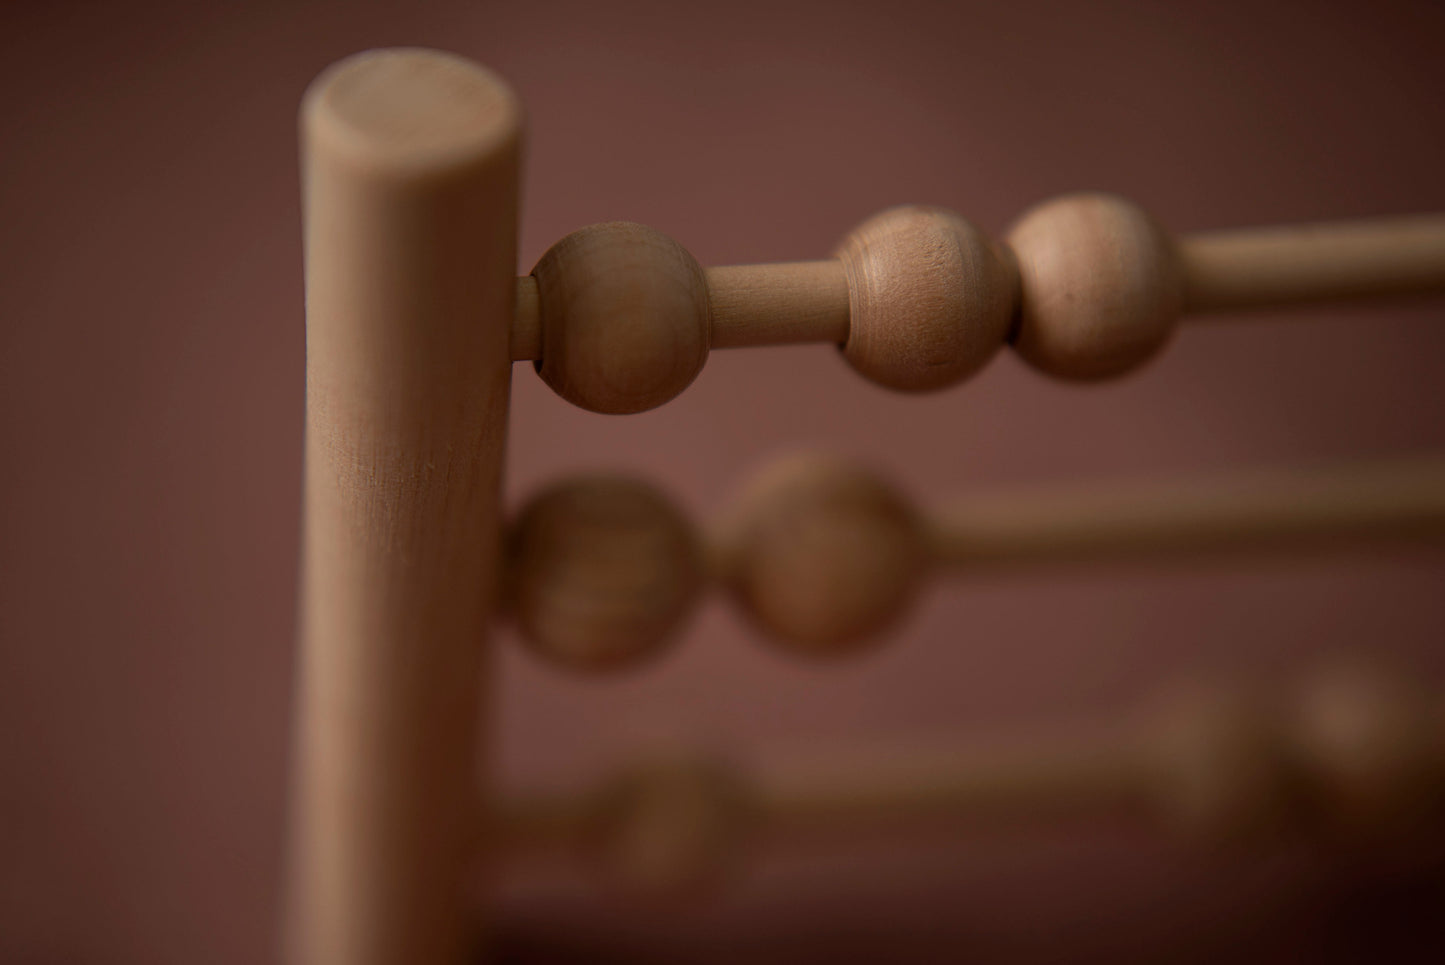 Felix | wooden abacus